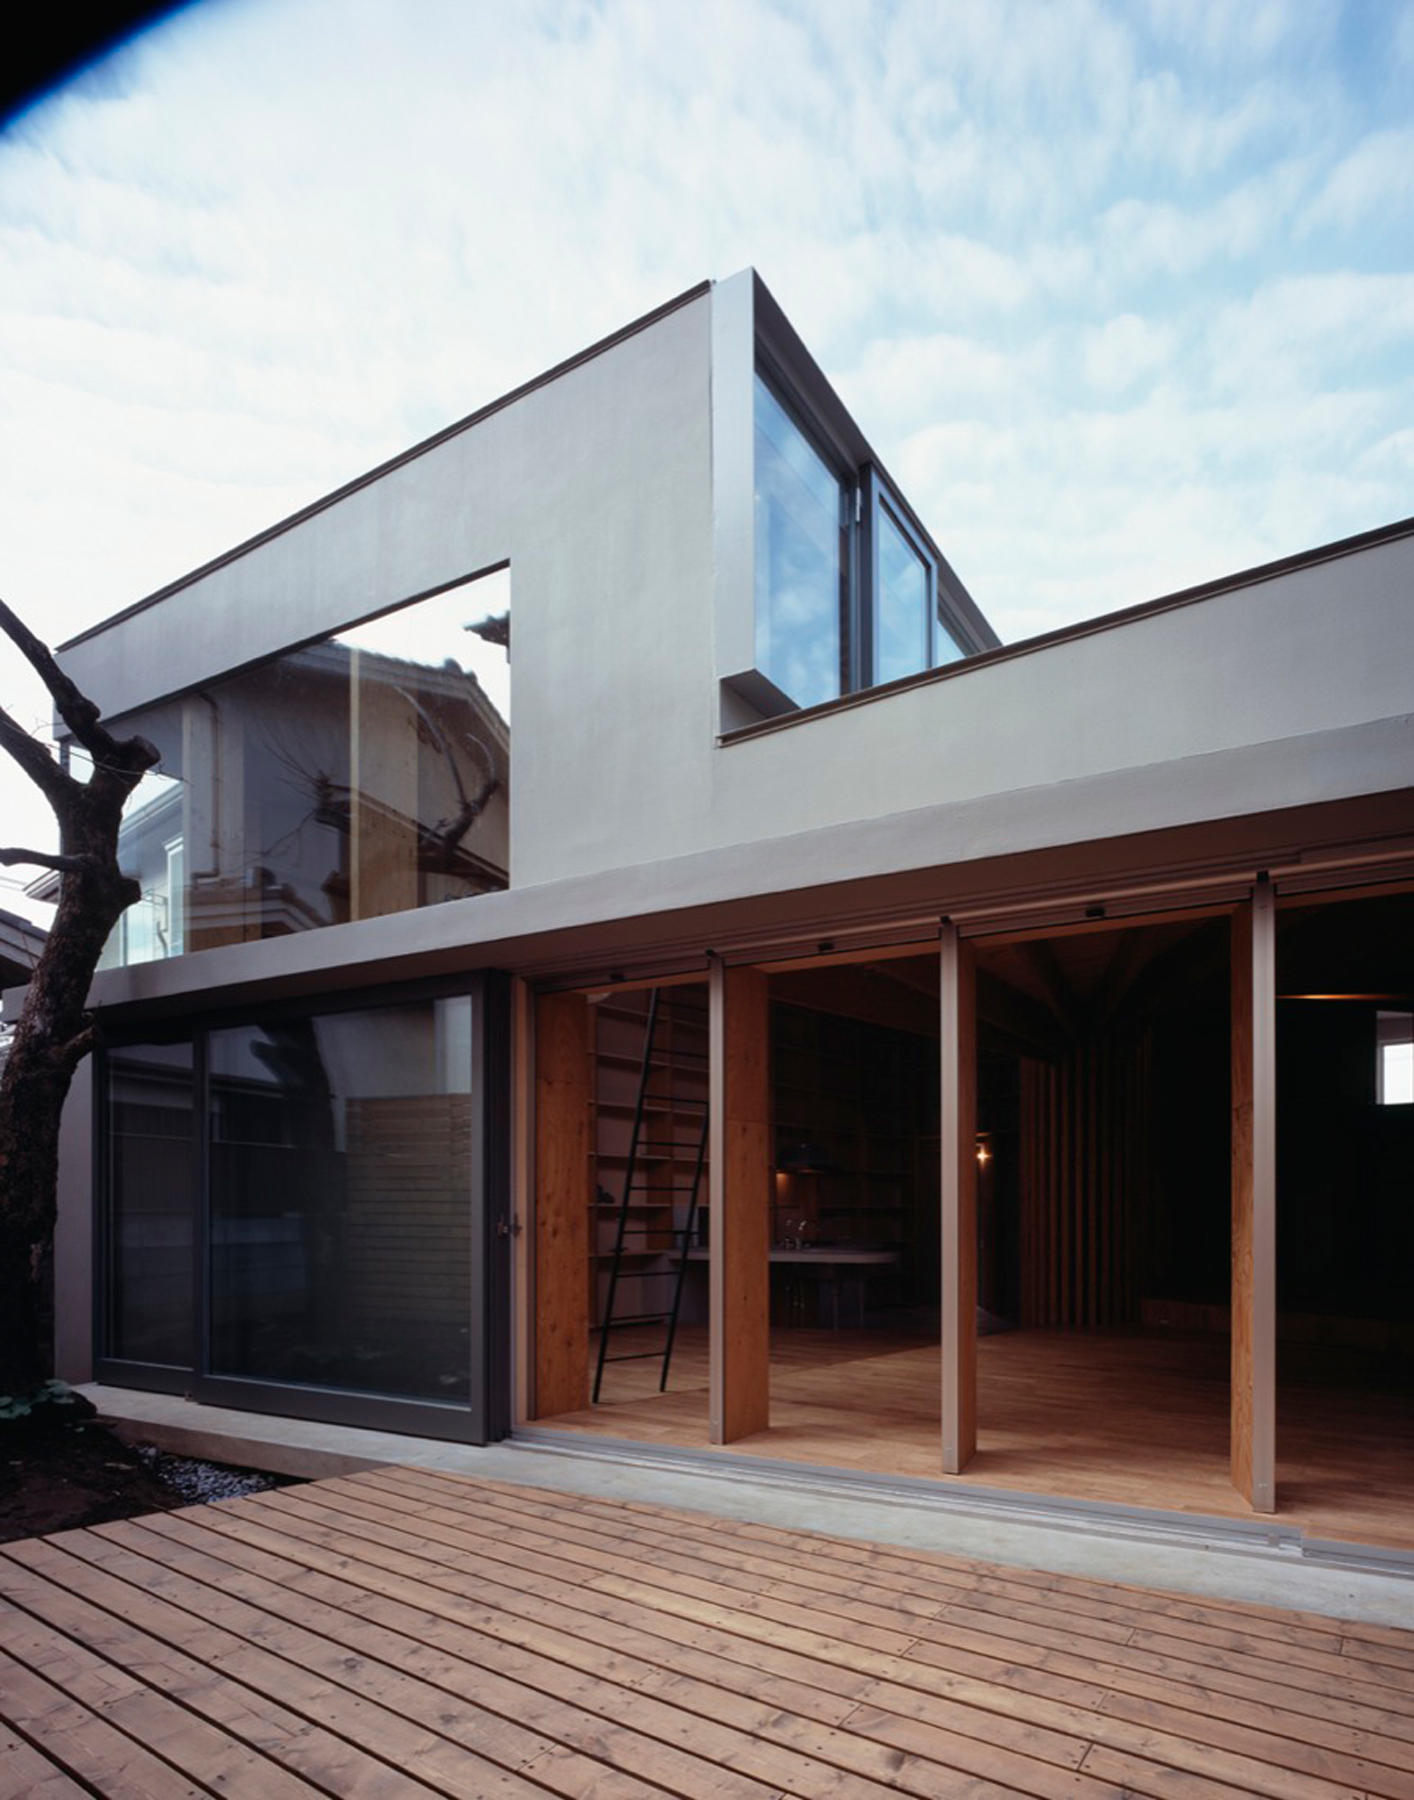 Tree House / Mount Fuji Architects Studio (10)